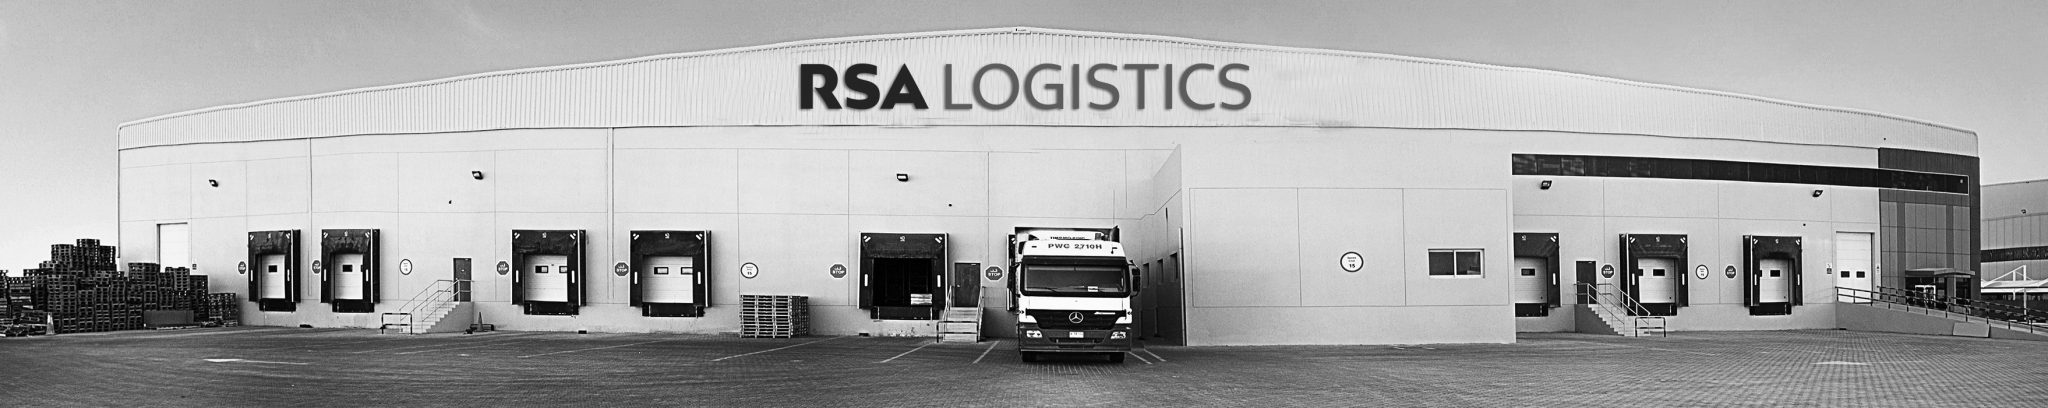 RSA logistics warehouse. Photo via RSA